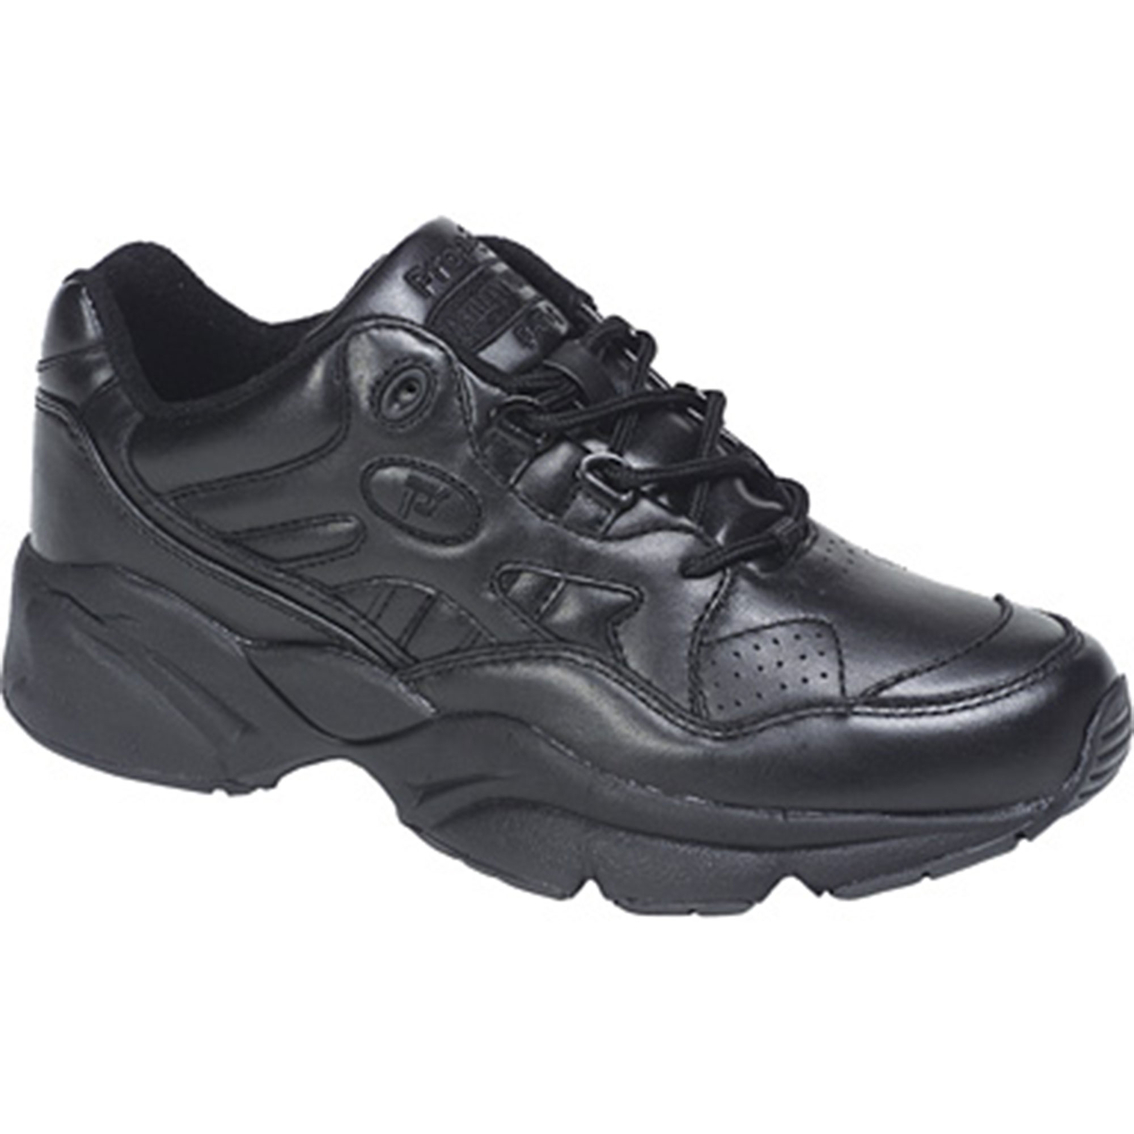 Propet Women's Stability Walker Shoes | Women's Athletic Shoes | Shoes ...